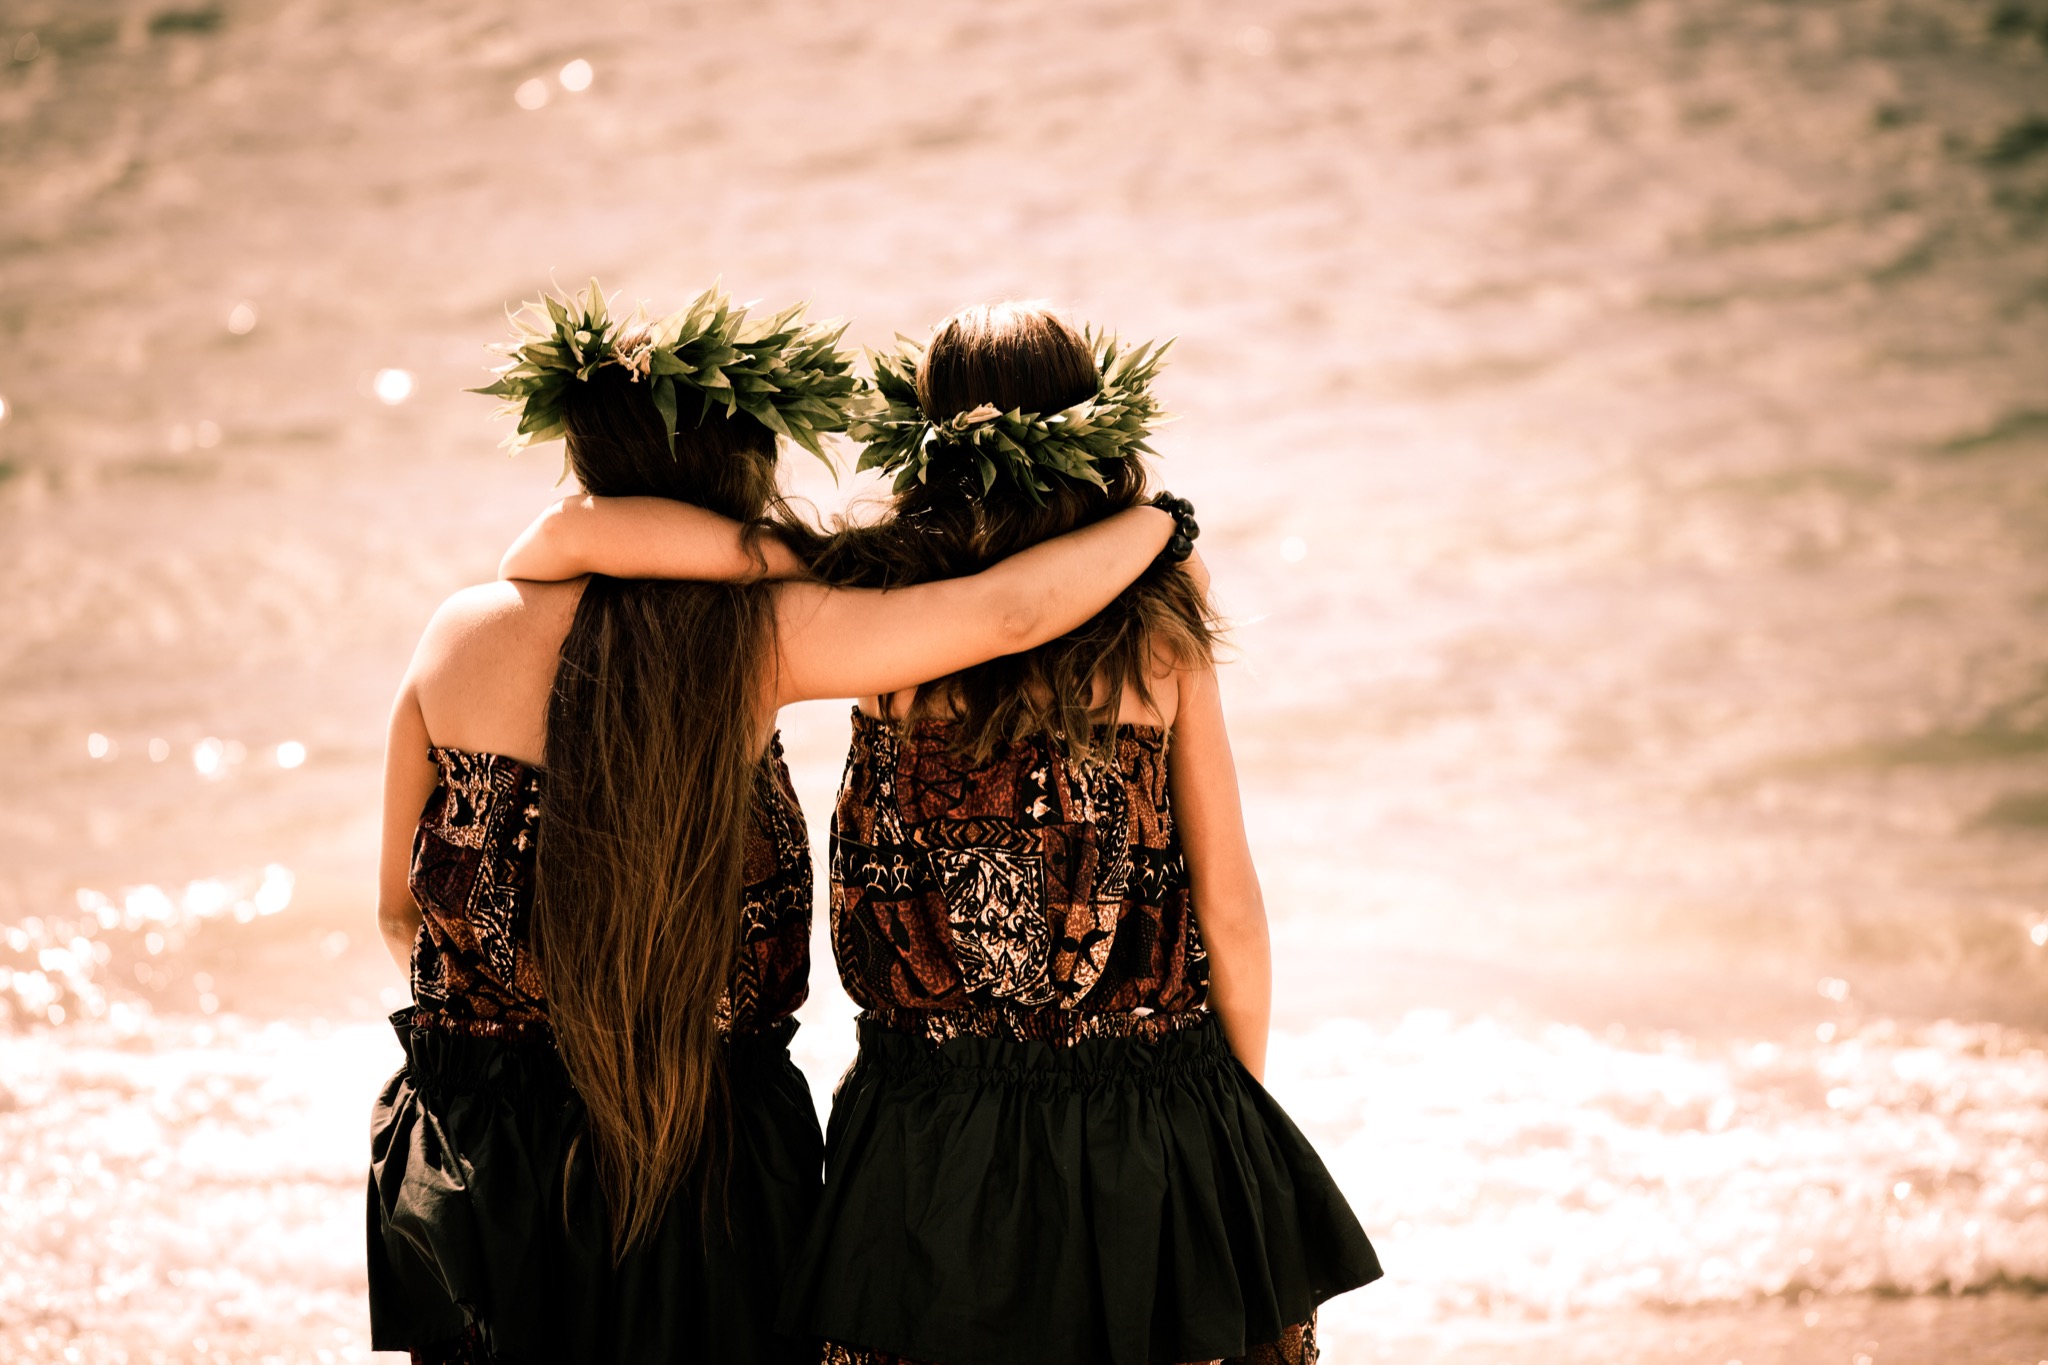 Pacific Island Girls